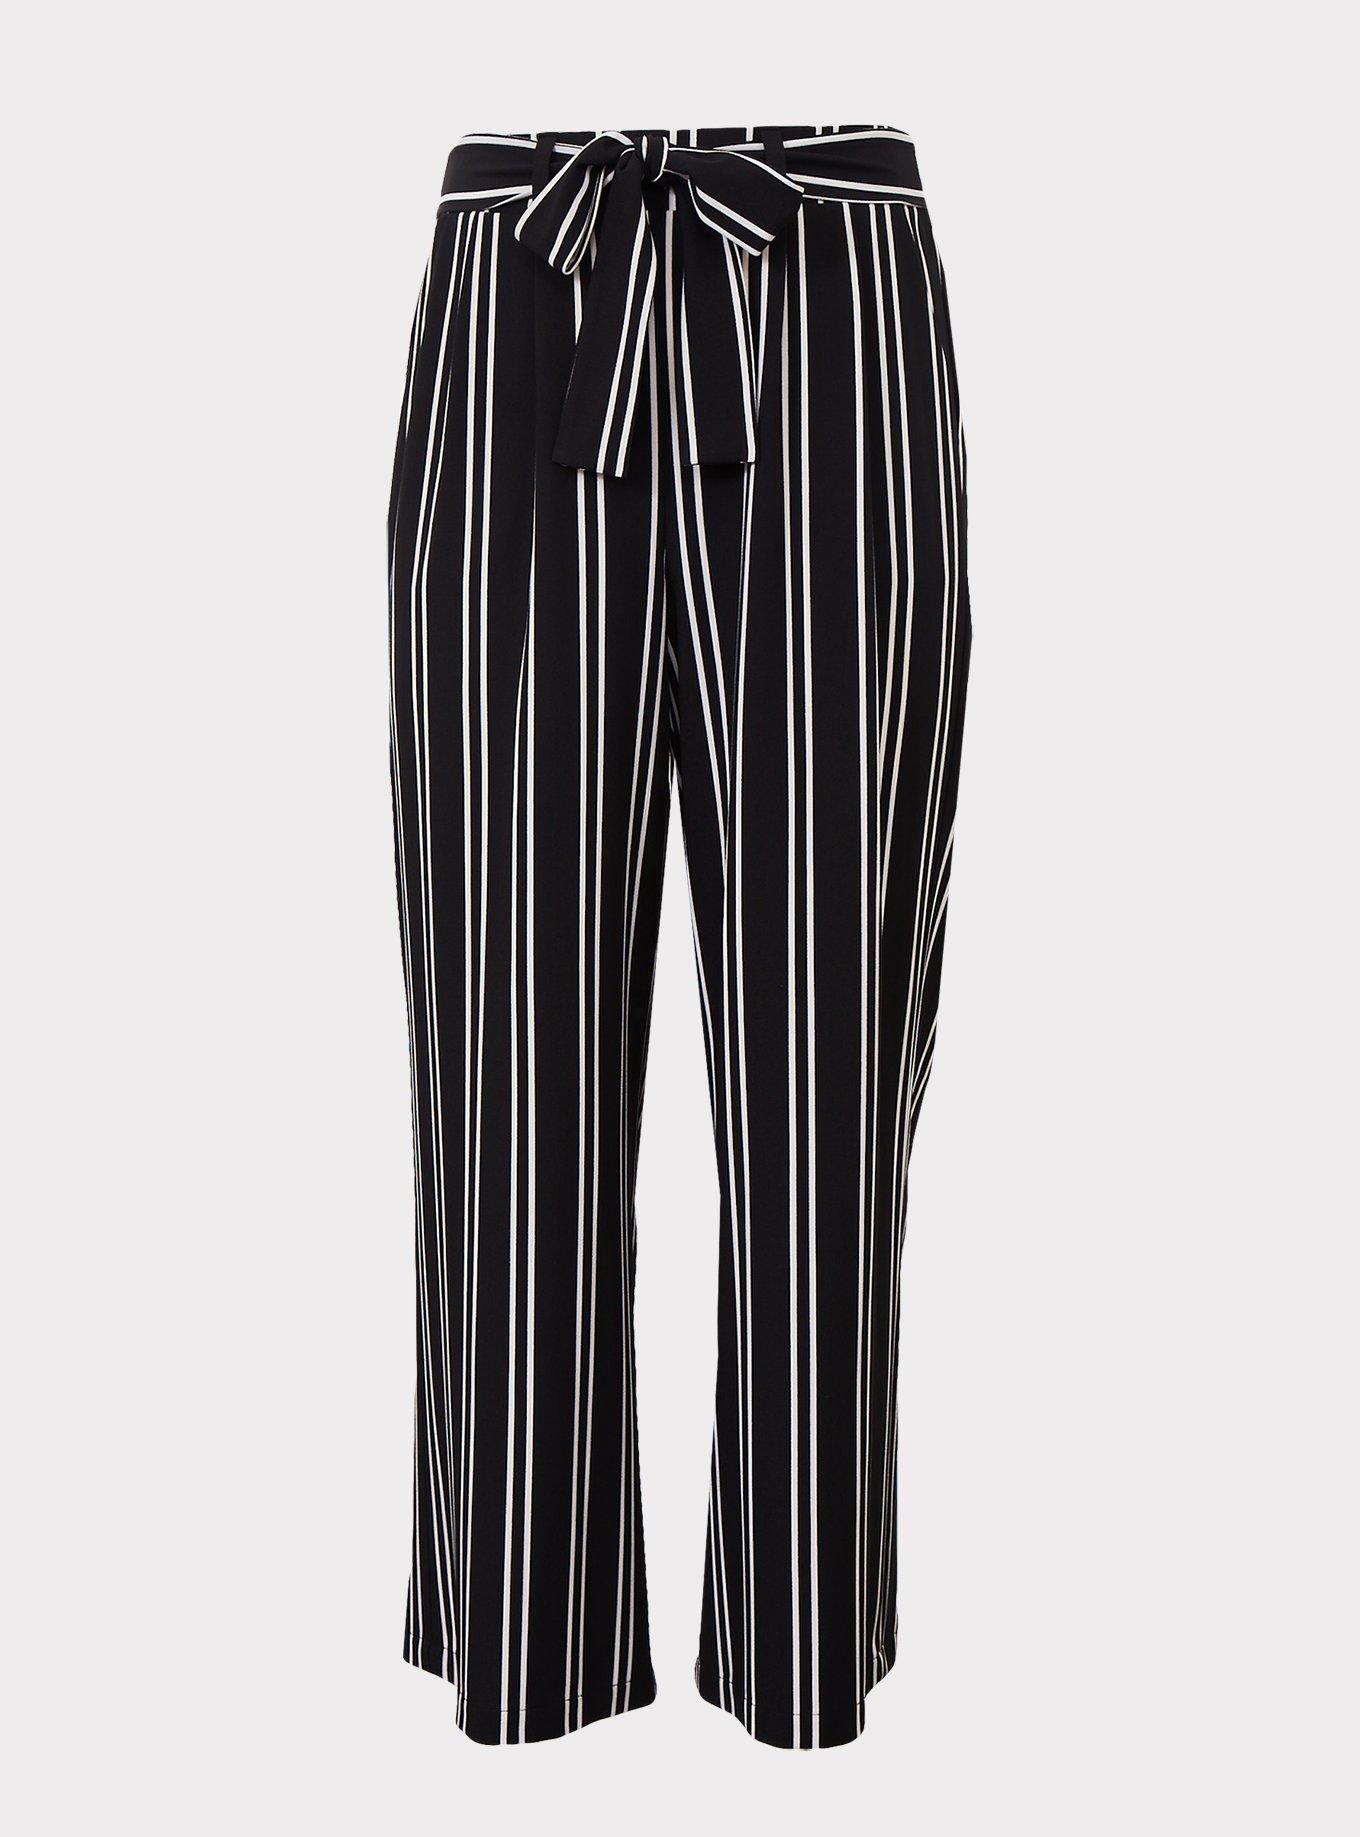 Plus Size - Black & White Stripe Crepe Wide Leg Pant - Torrid